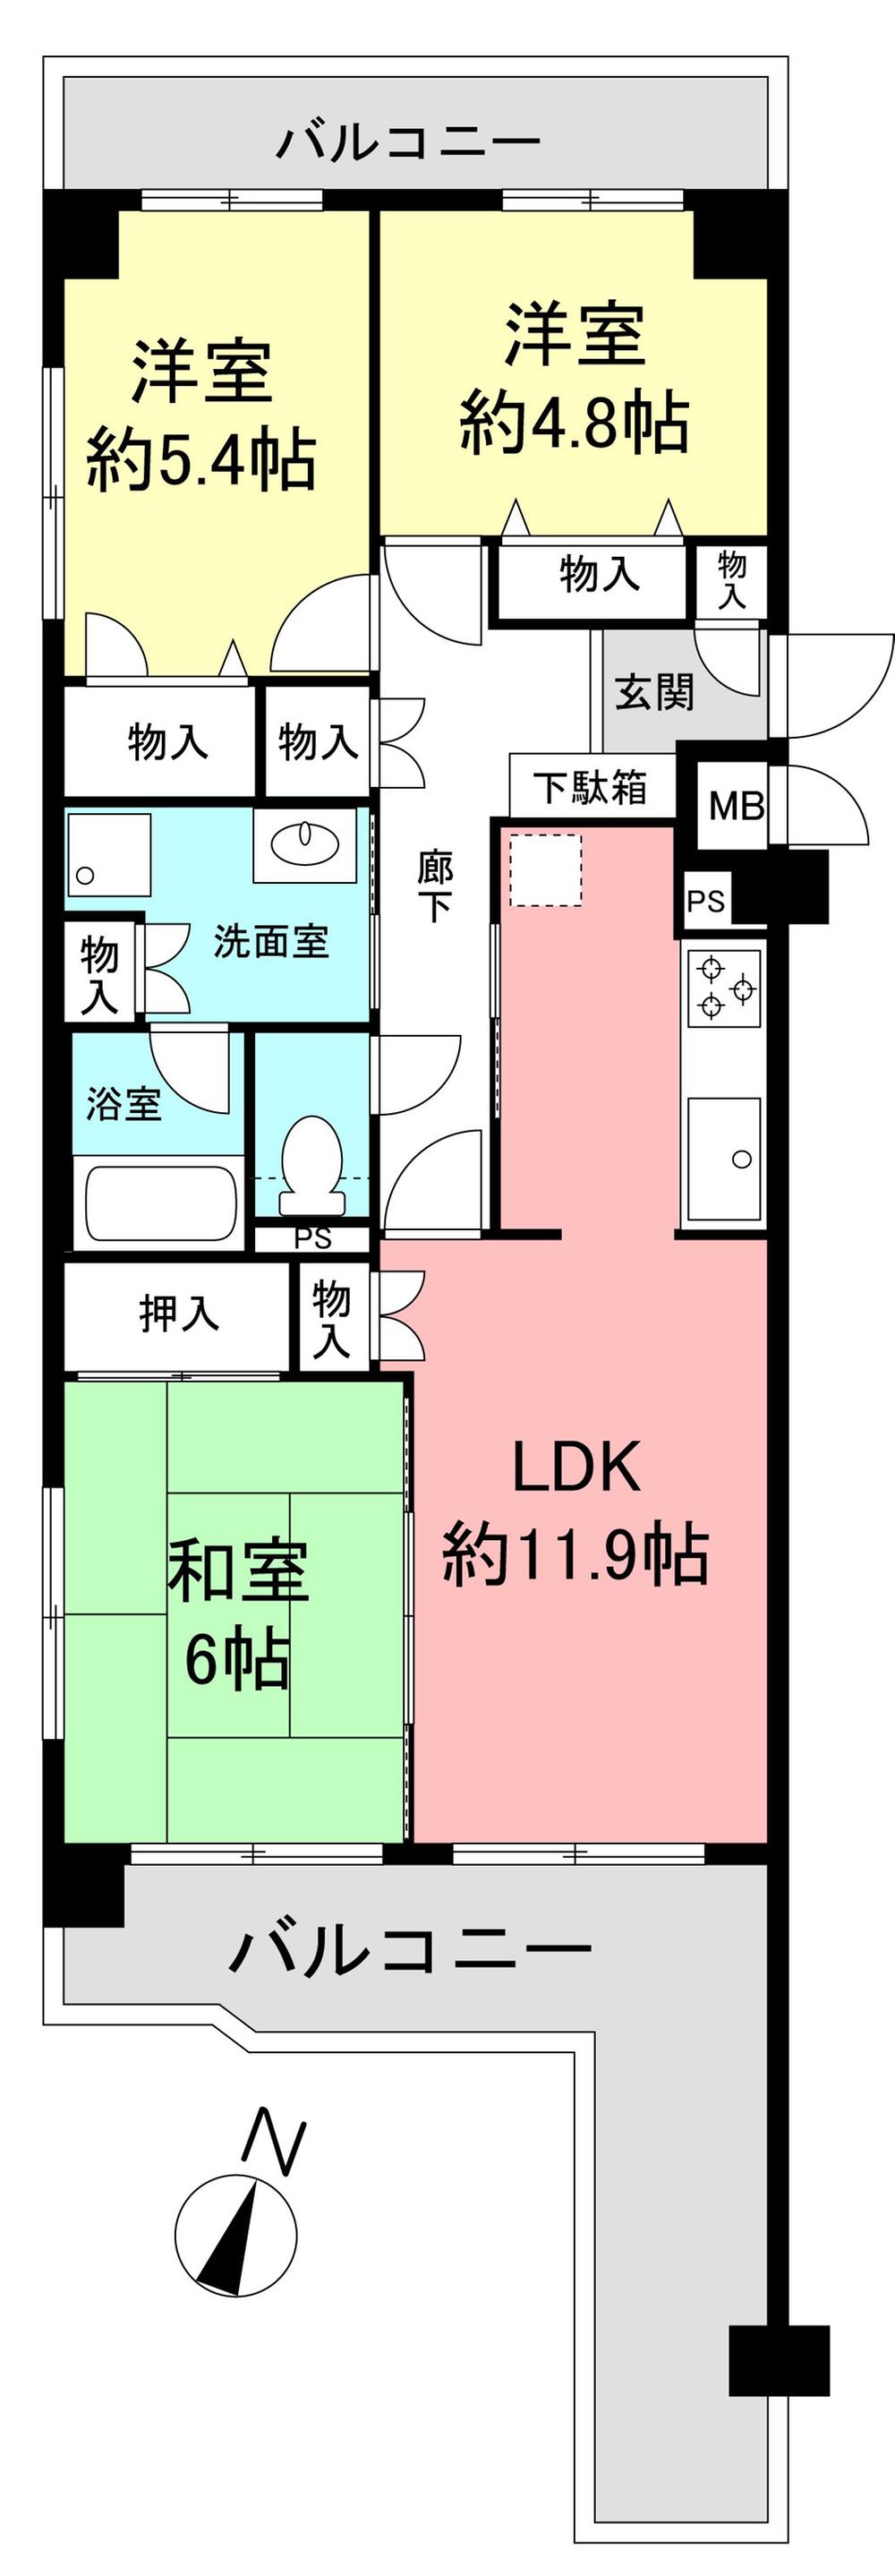 Floor plan. 3LDK, Price 28 million yen, Occupied area 67.56 sq m , Balcony area 24.25 sq m